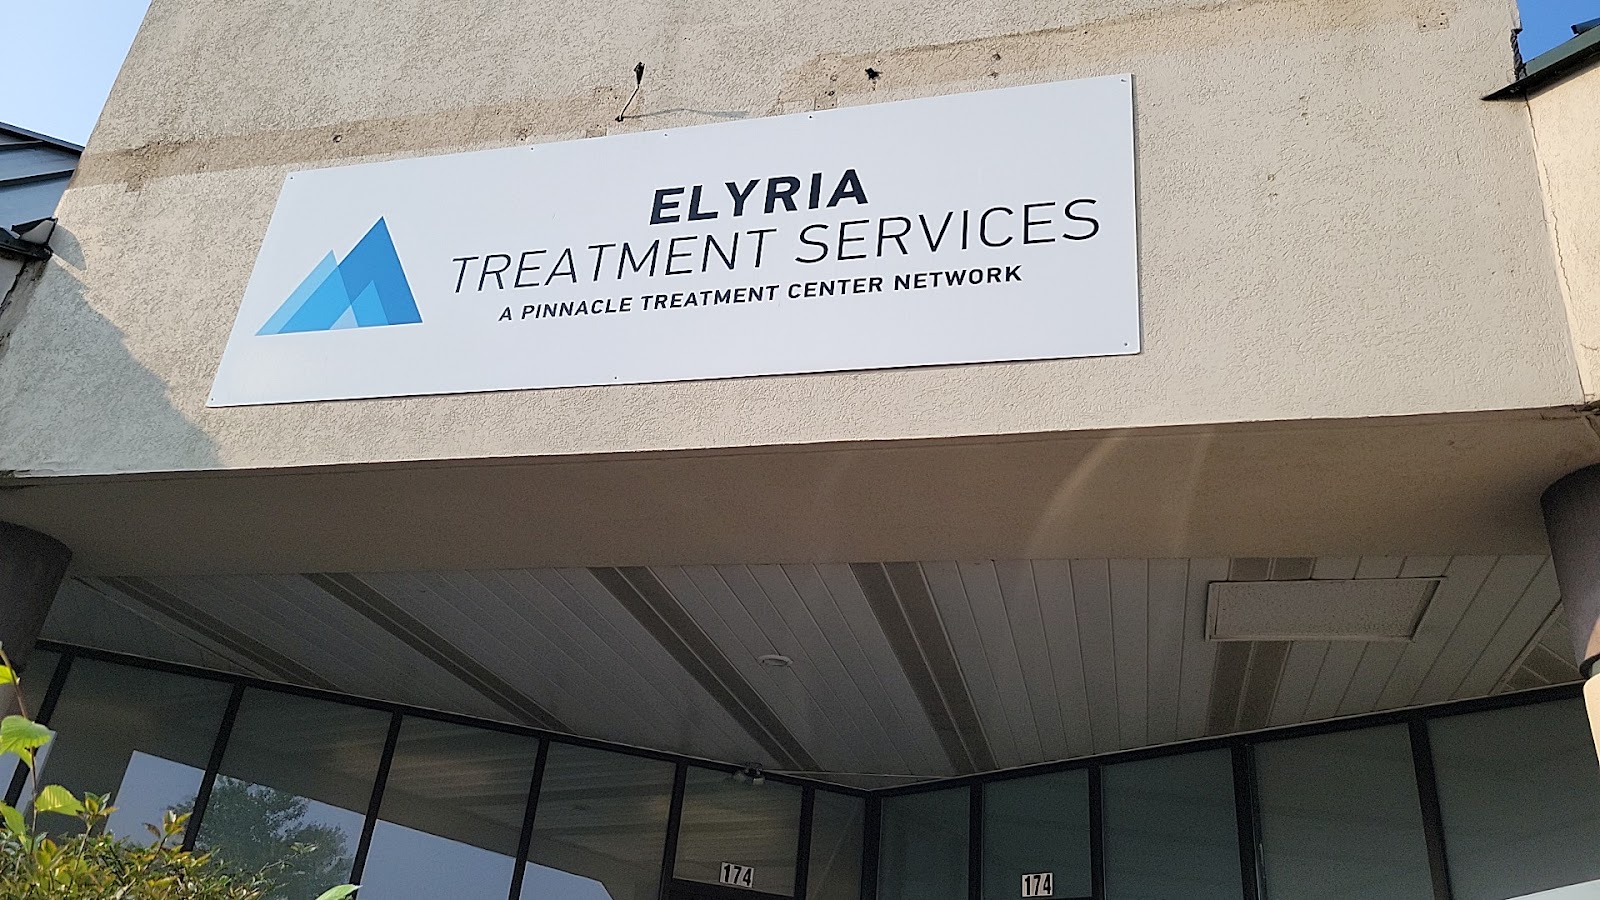 Elyria Treatment Services